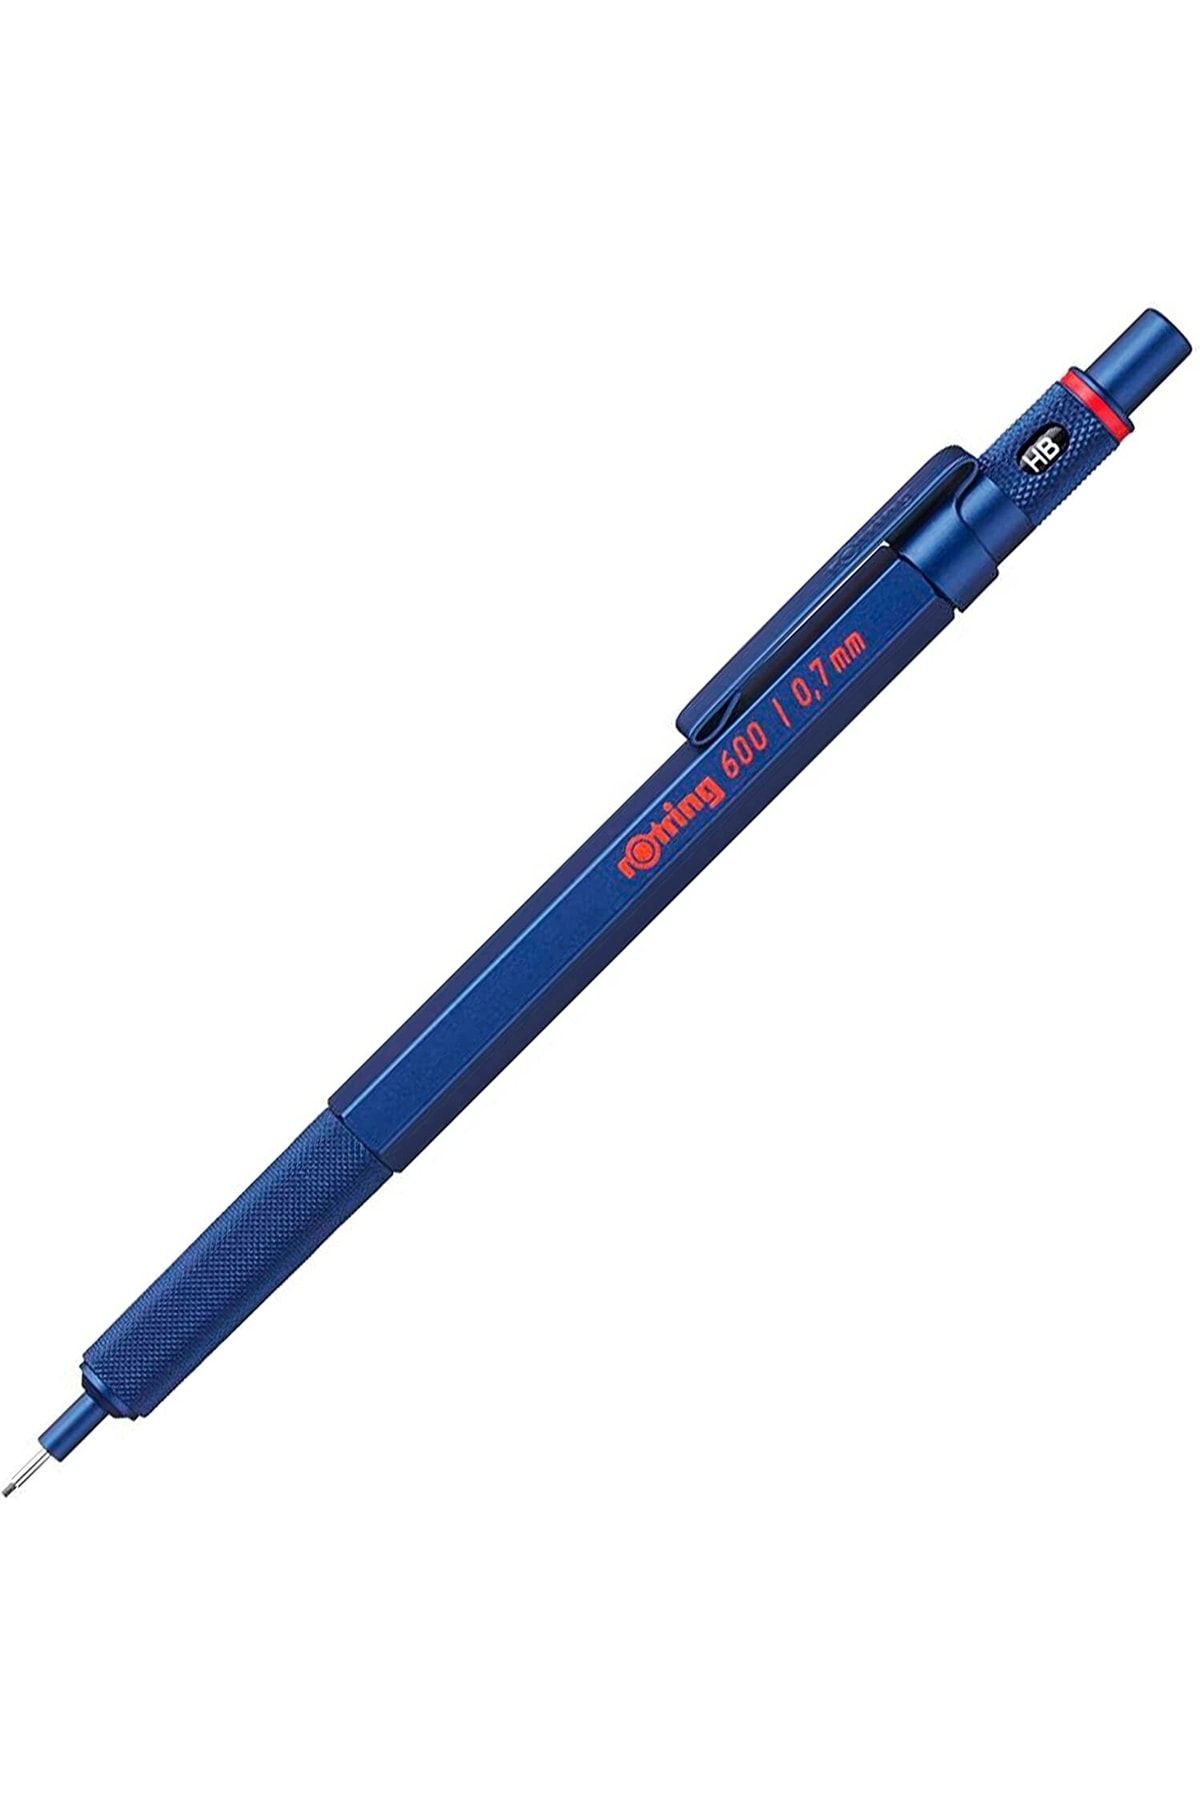 Rotring 600 Ince Uçlu Kalem Metalik Mavi 0.7 Mm